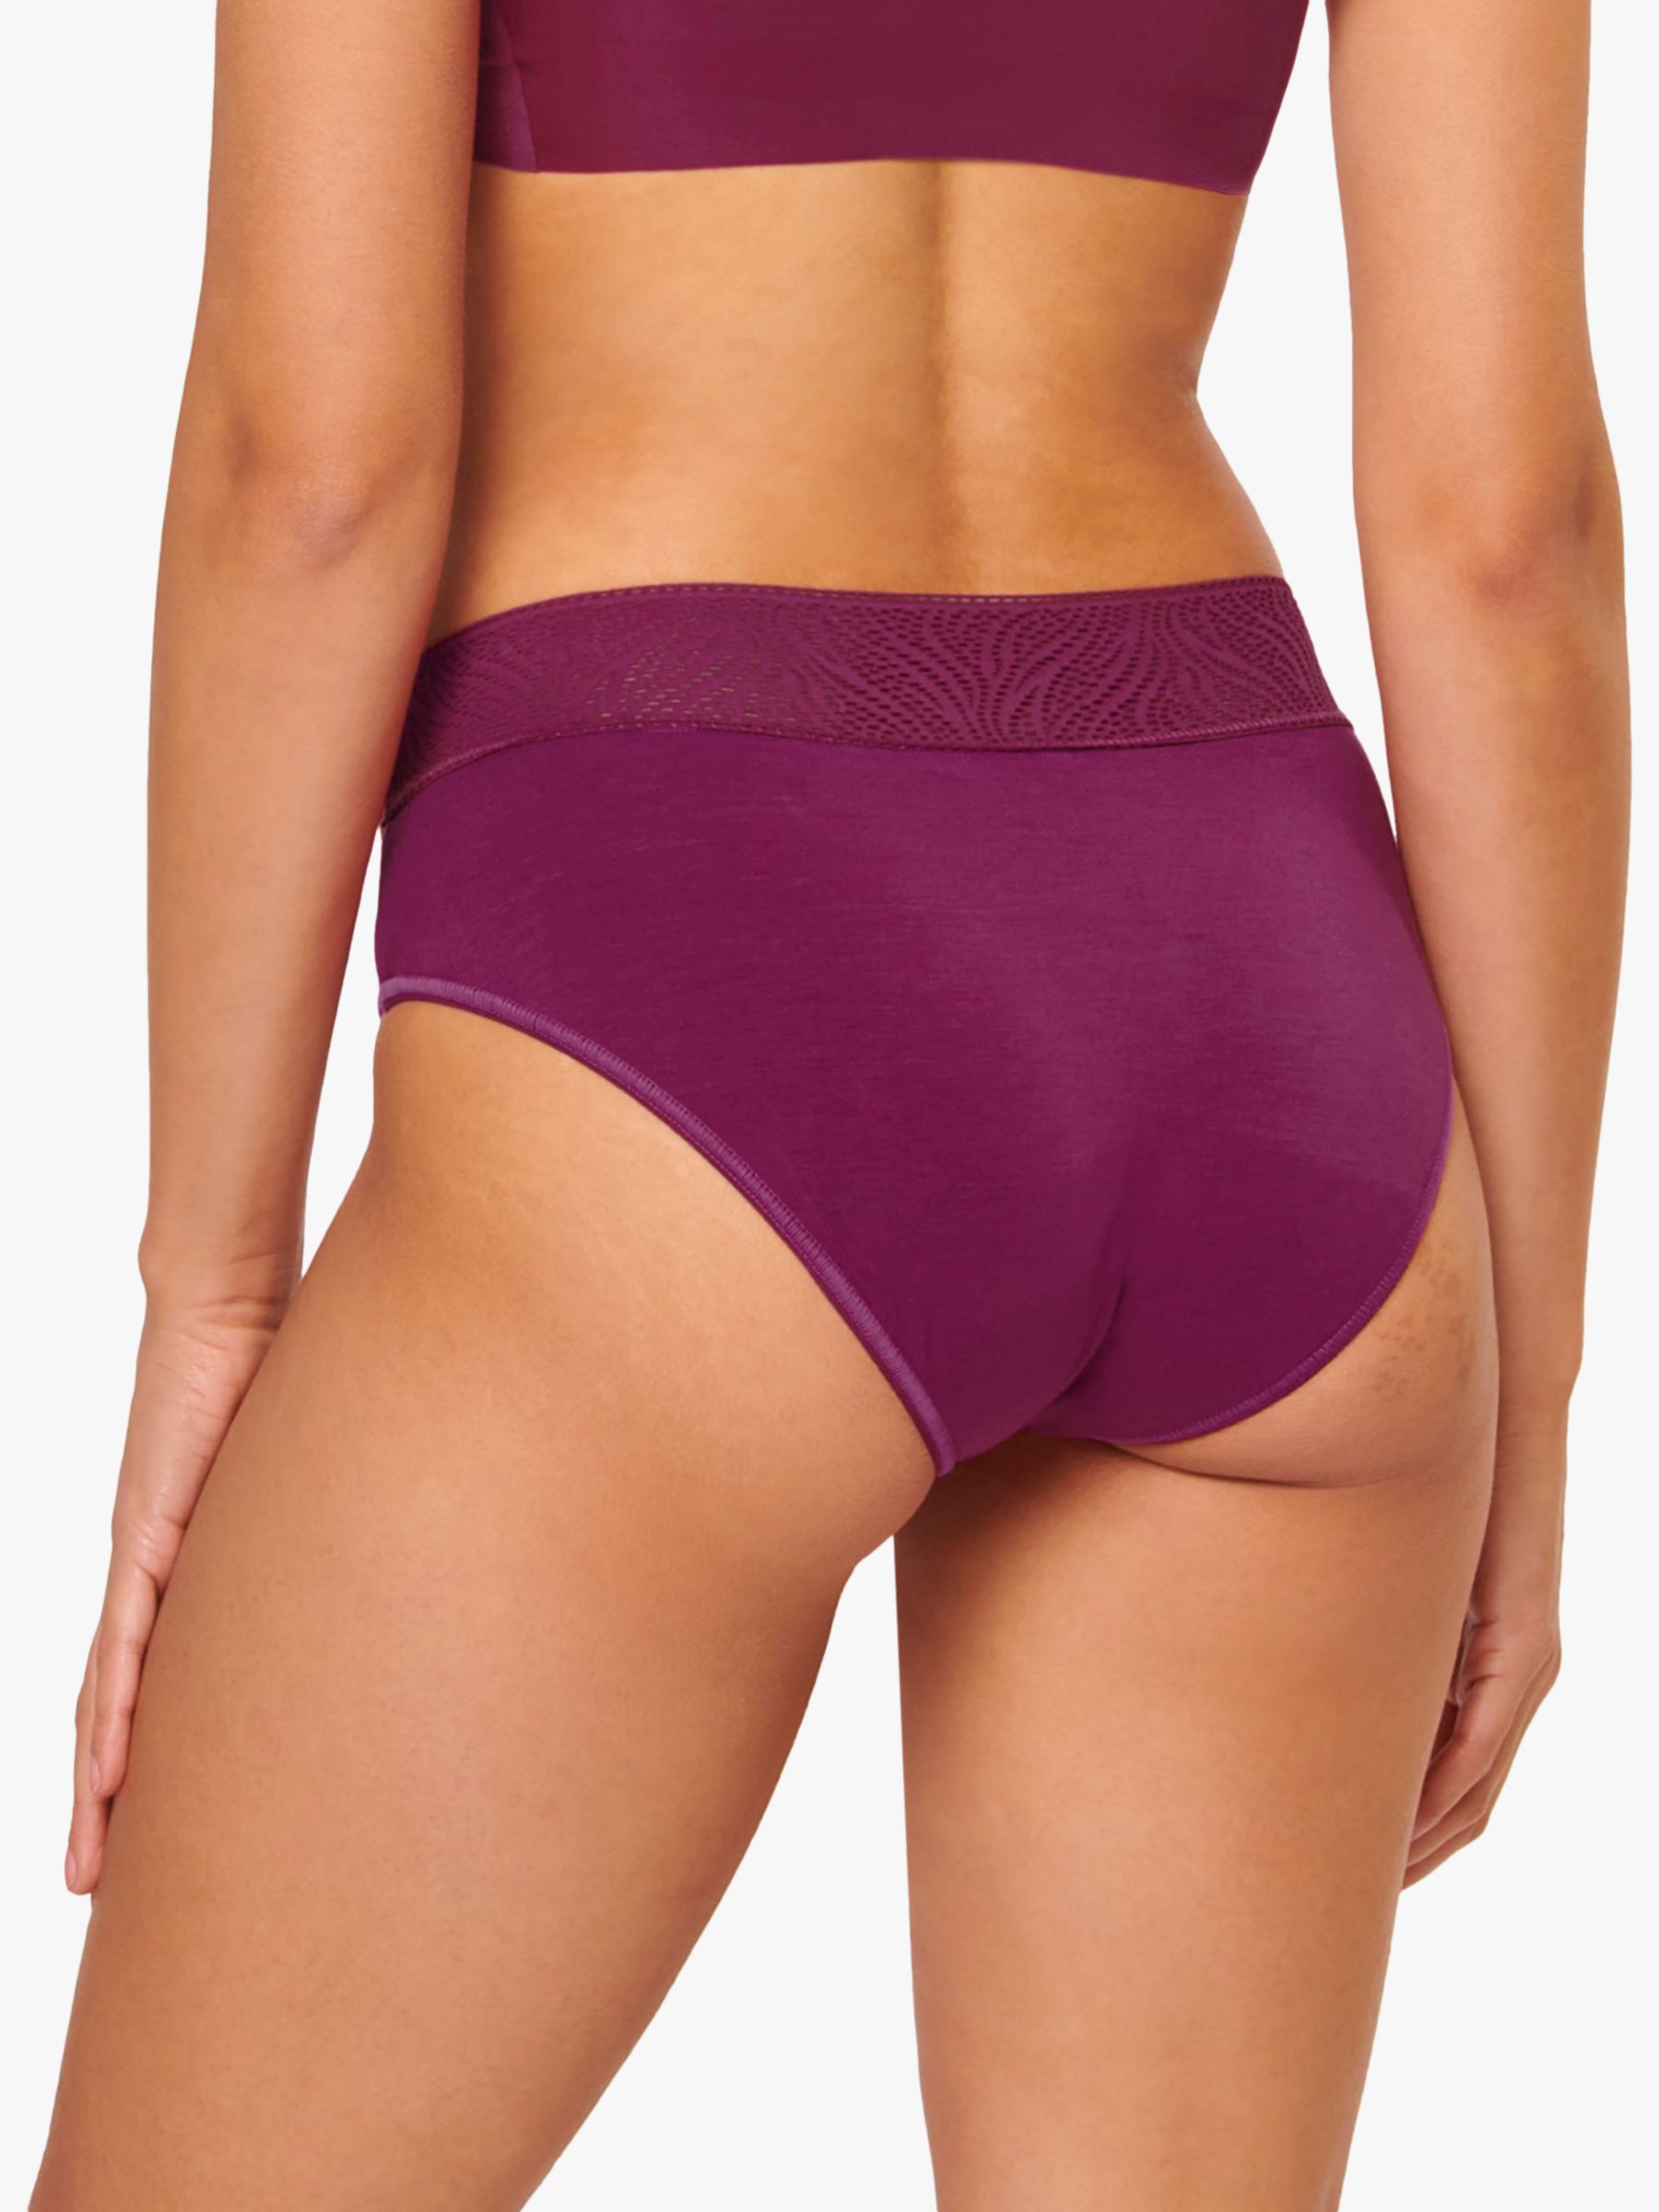 Lilgiuy Women's Solid Underwear Cotton StretchPanties Lingerie